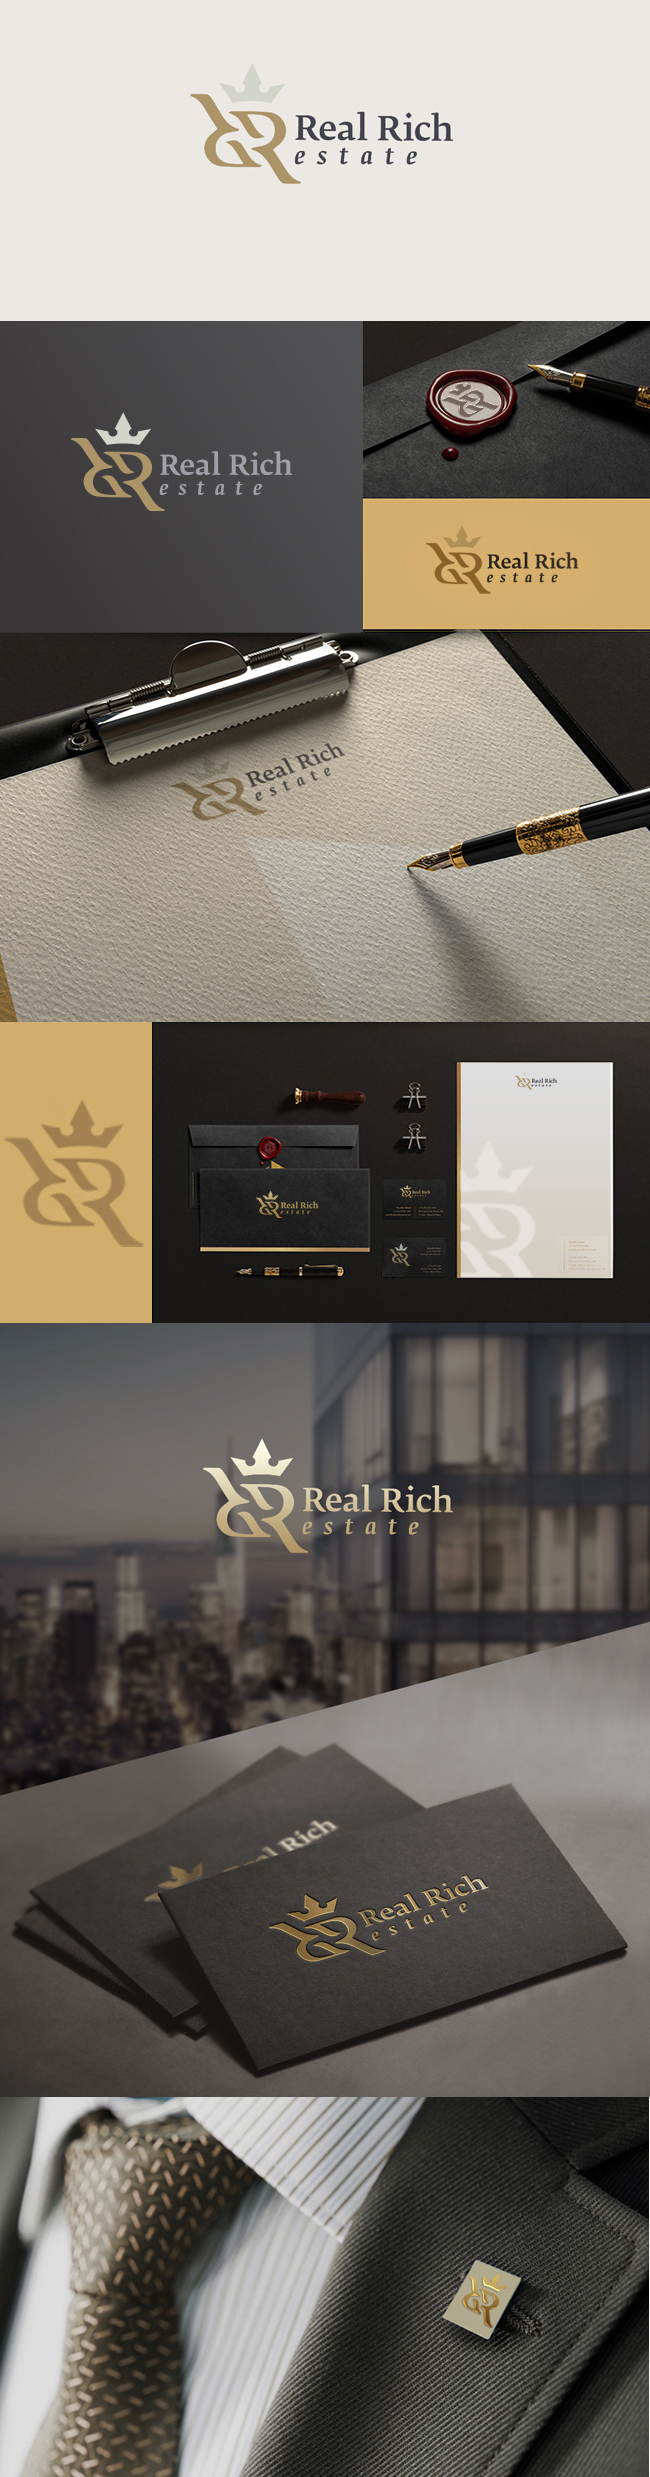 Logo-Real-Rich-Estate-650-2